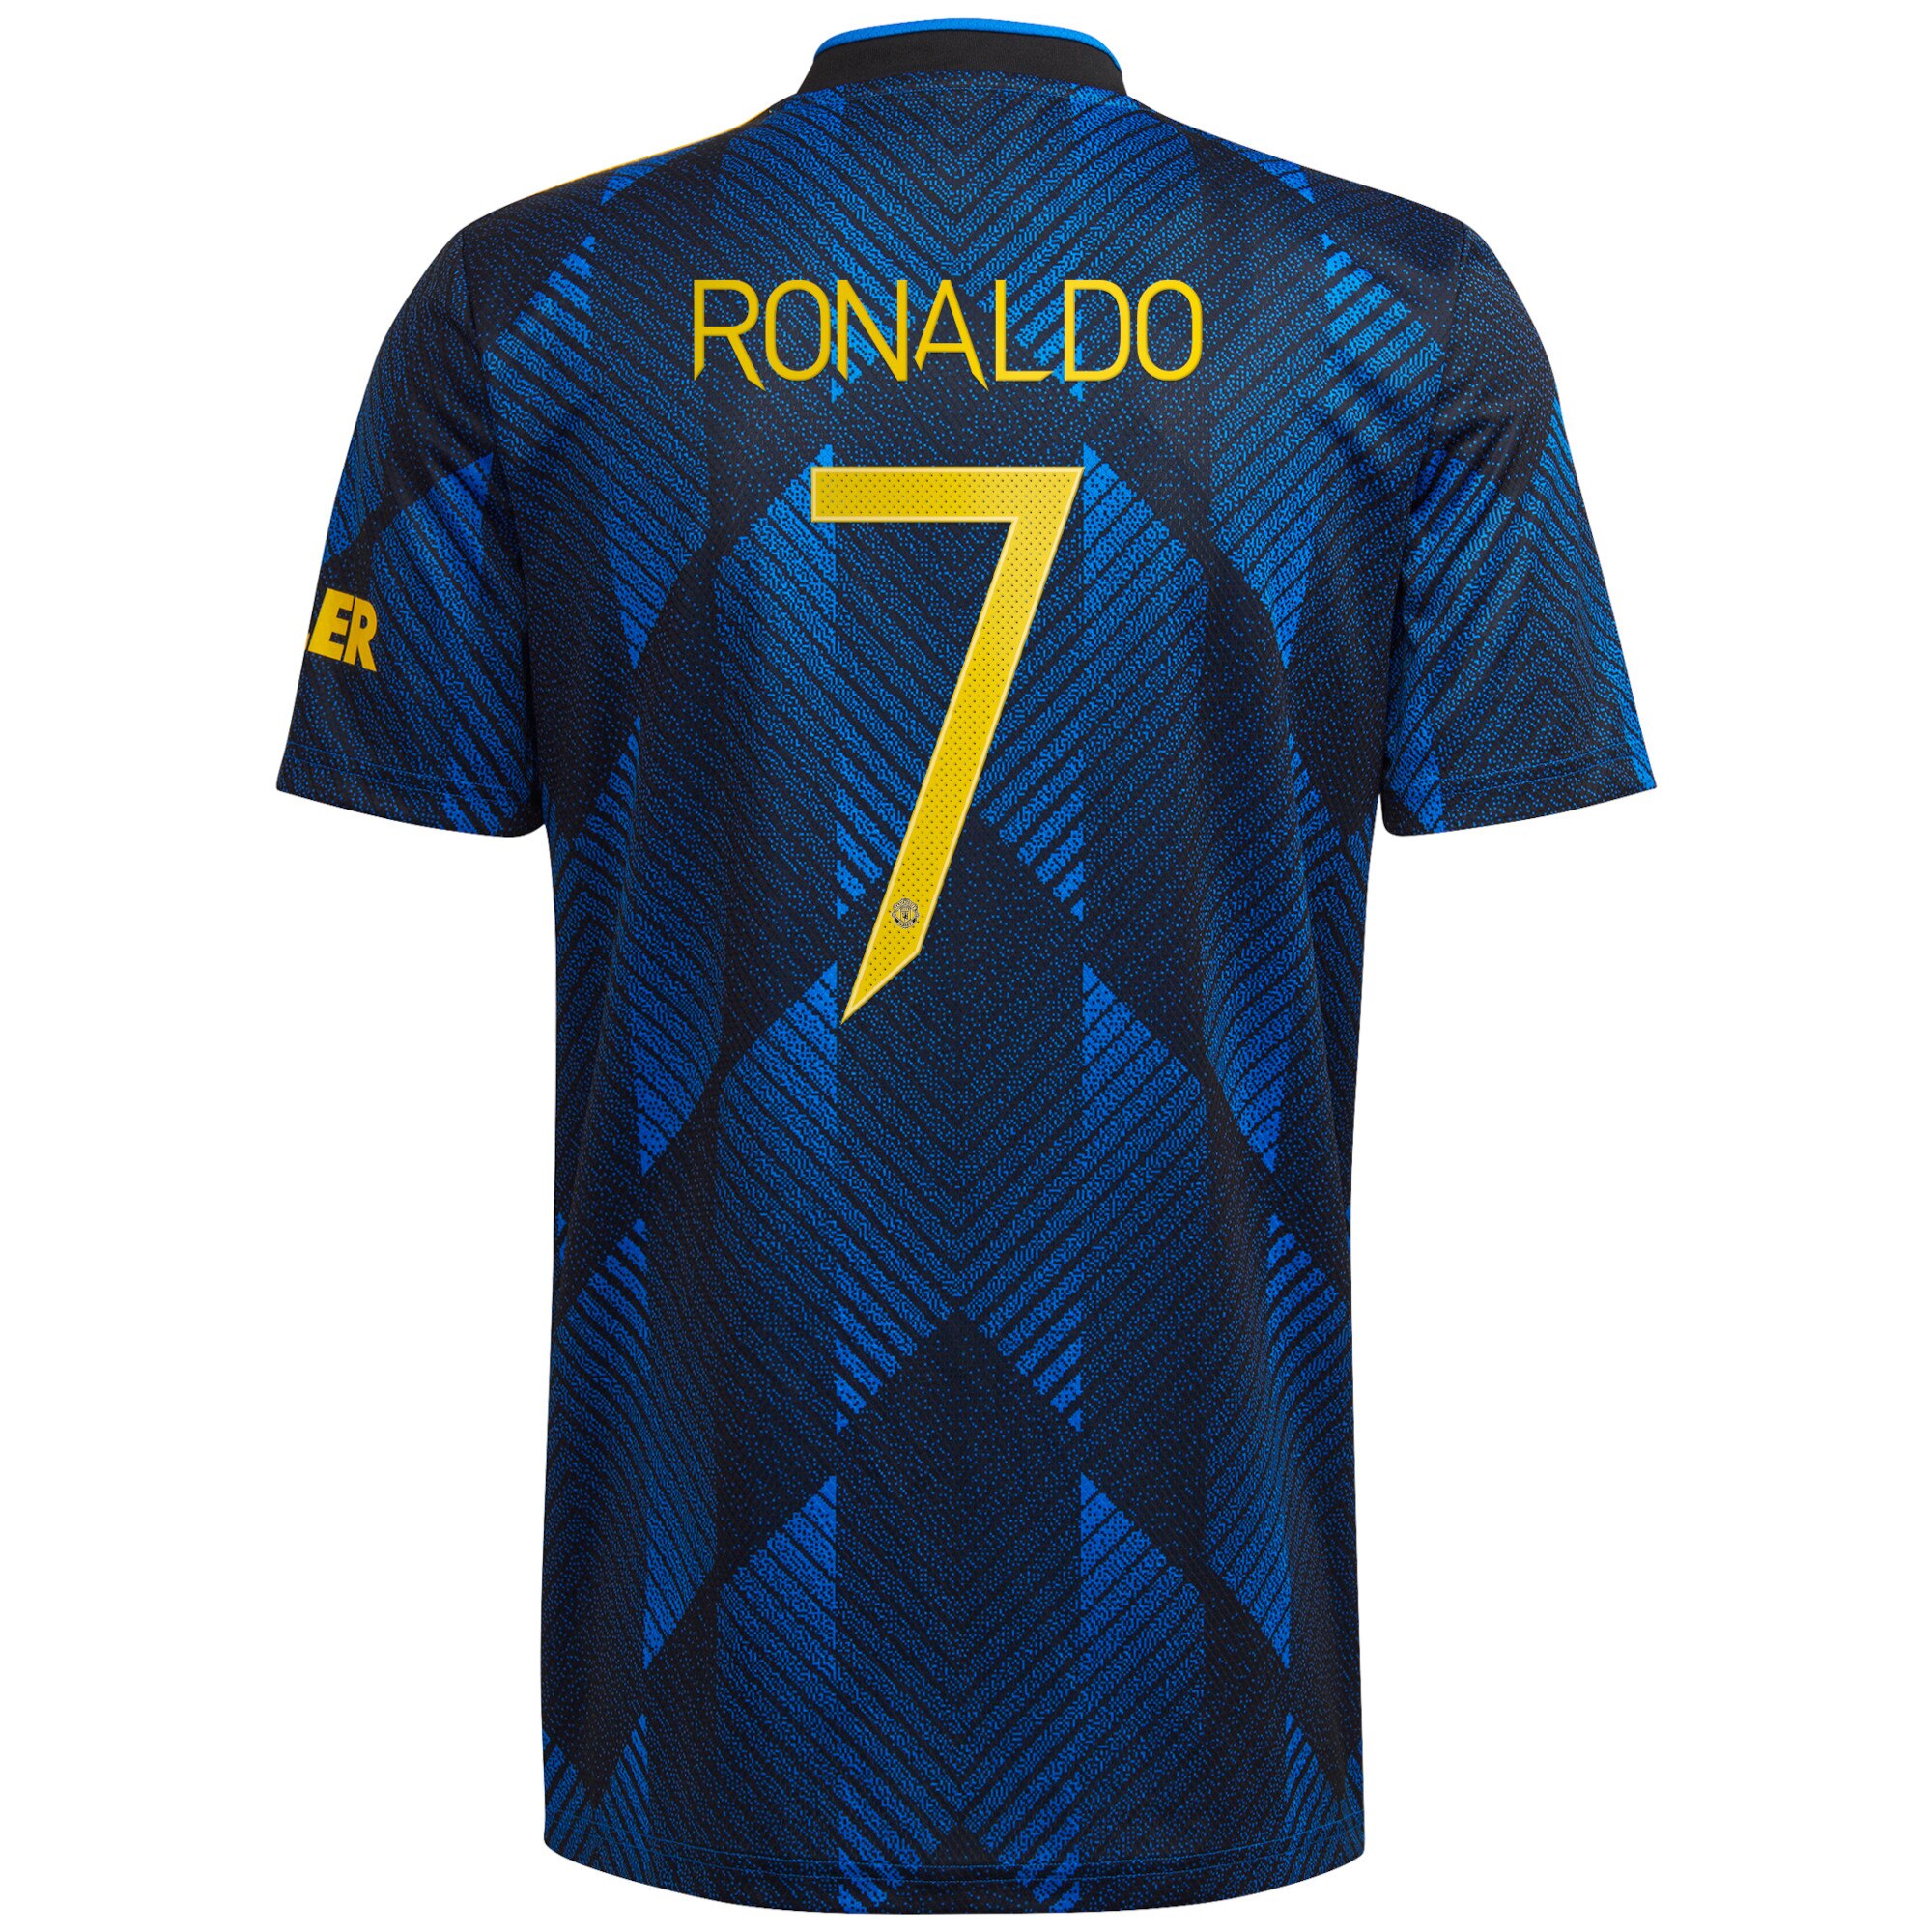 ronaldo soccer jersey manchester united